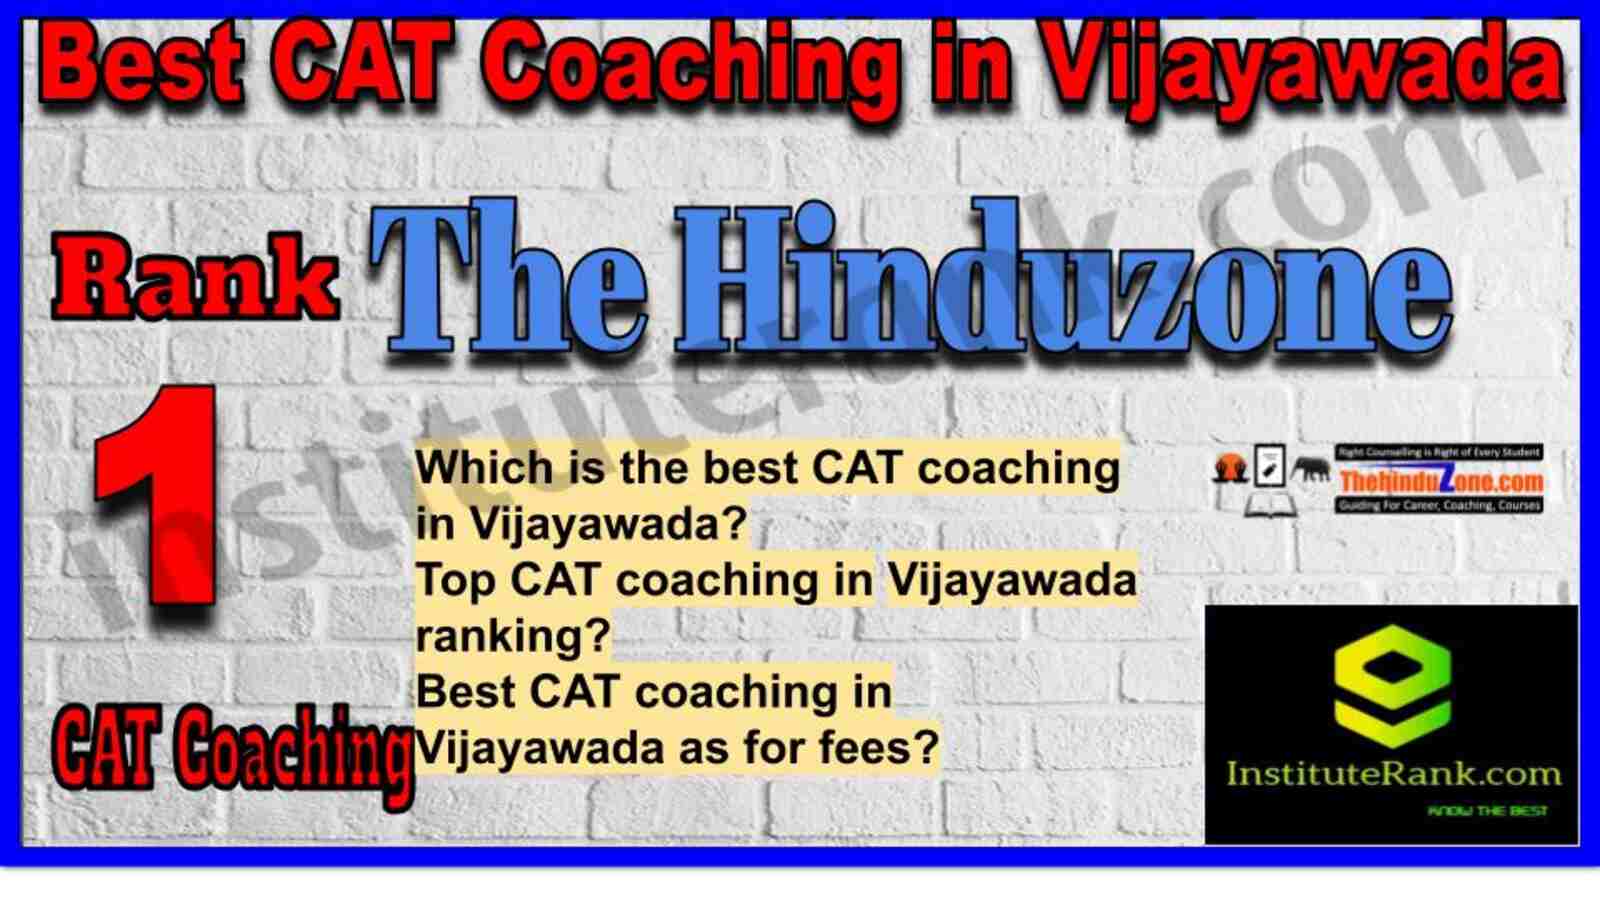 Rank 1. The Hinduzone CAT Coaching in Vijayawada